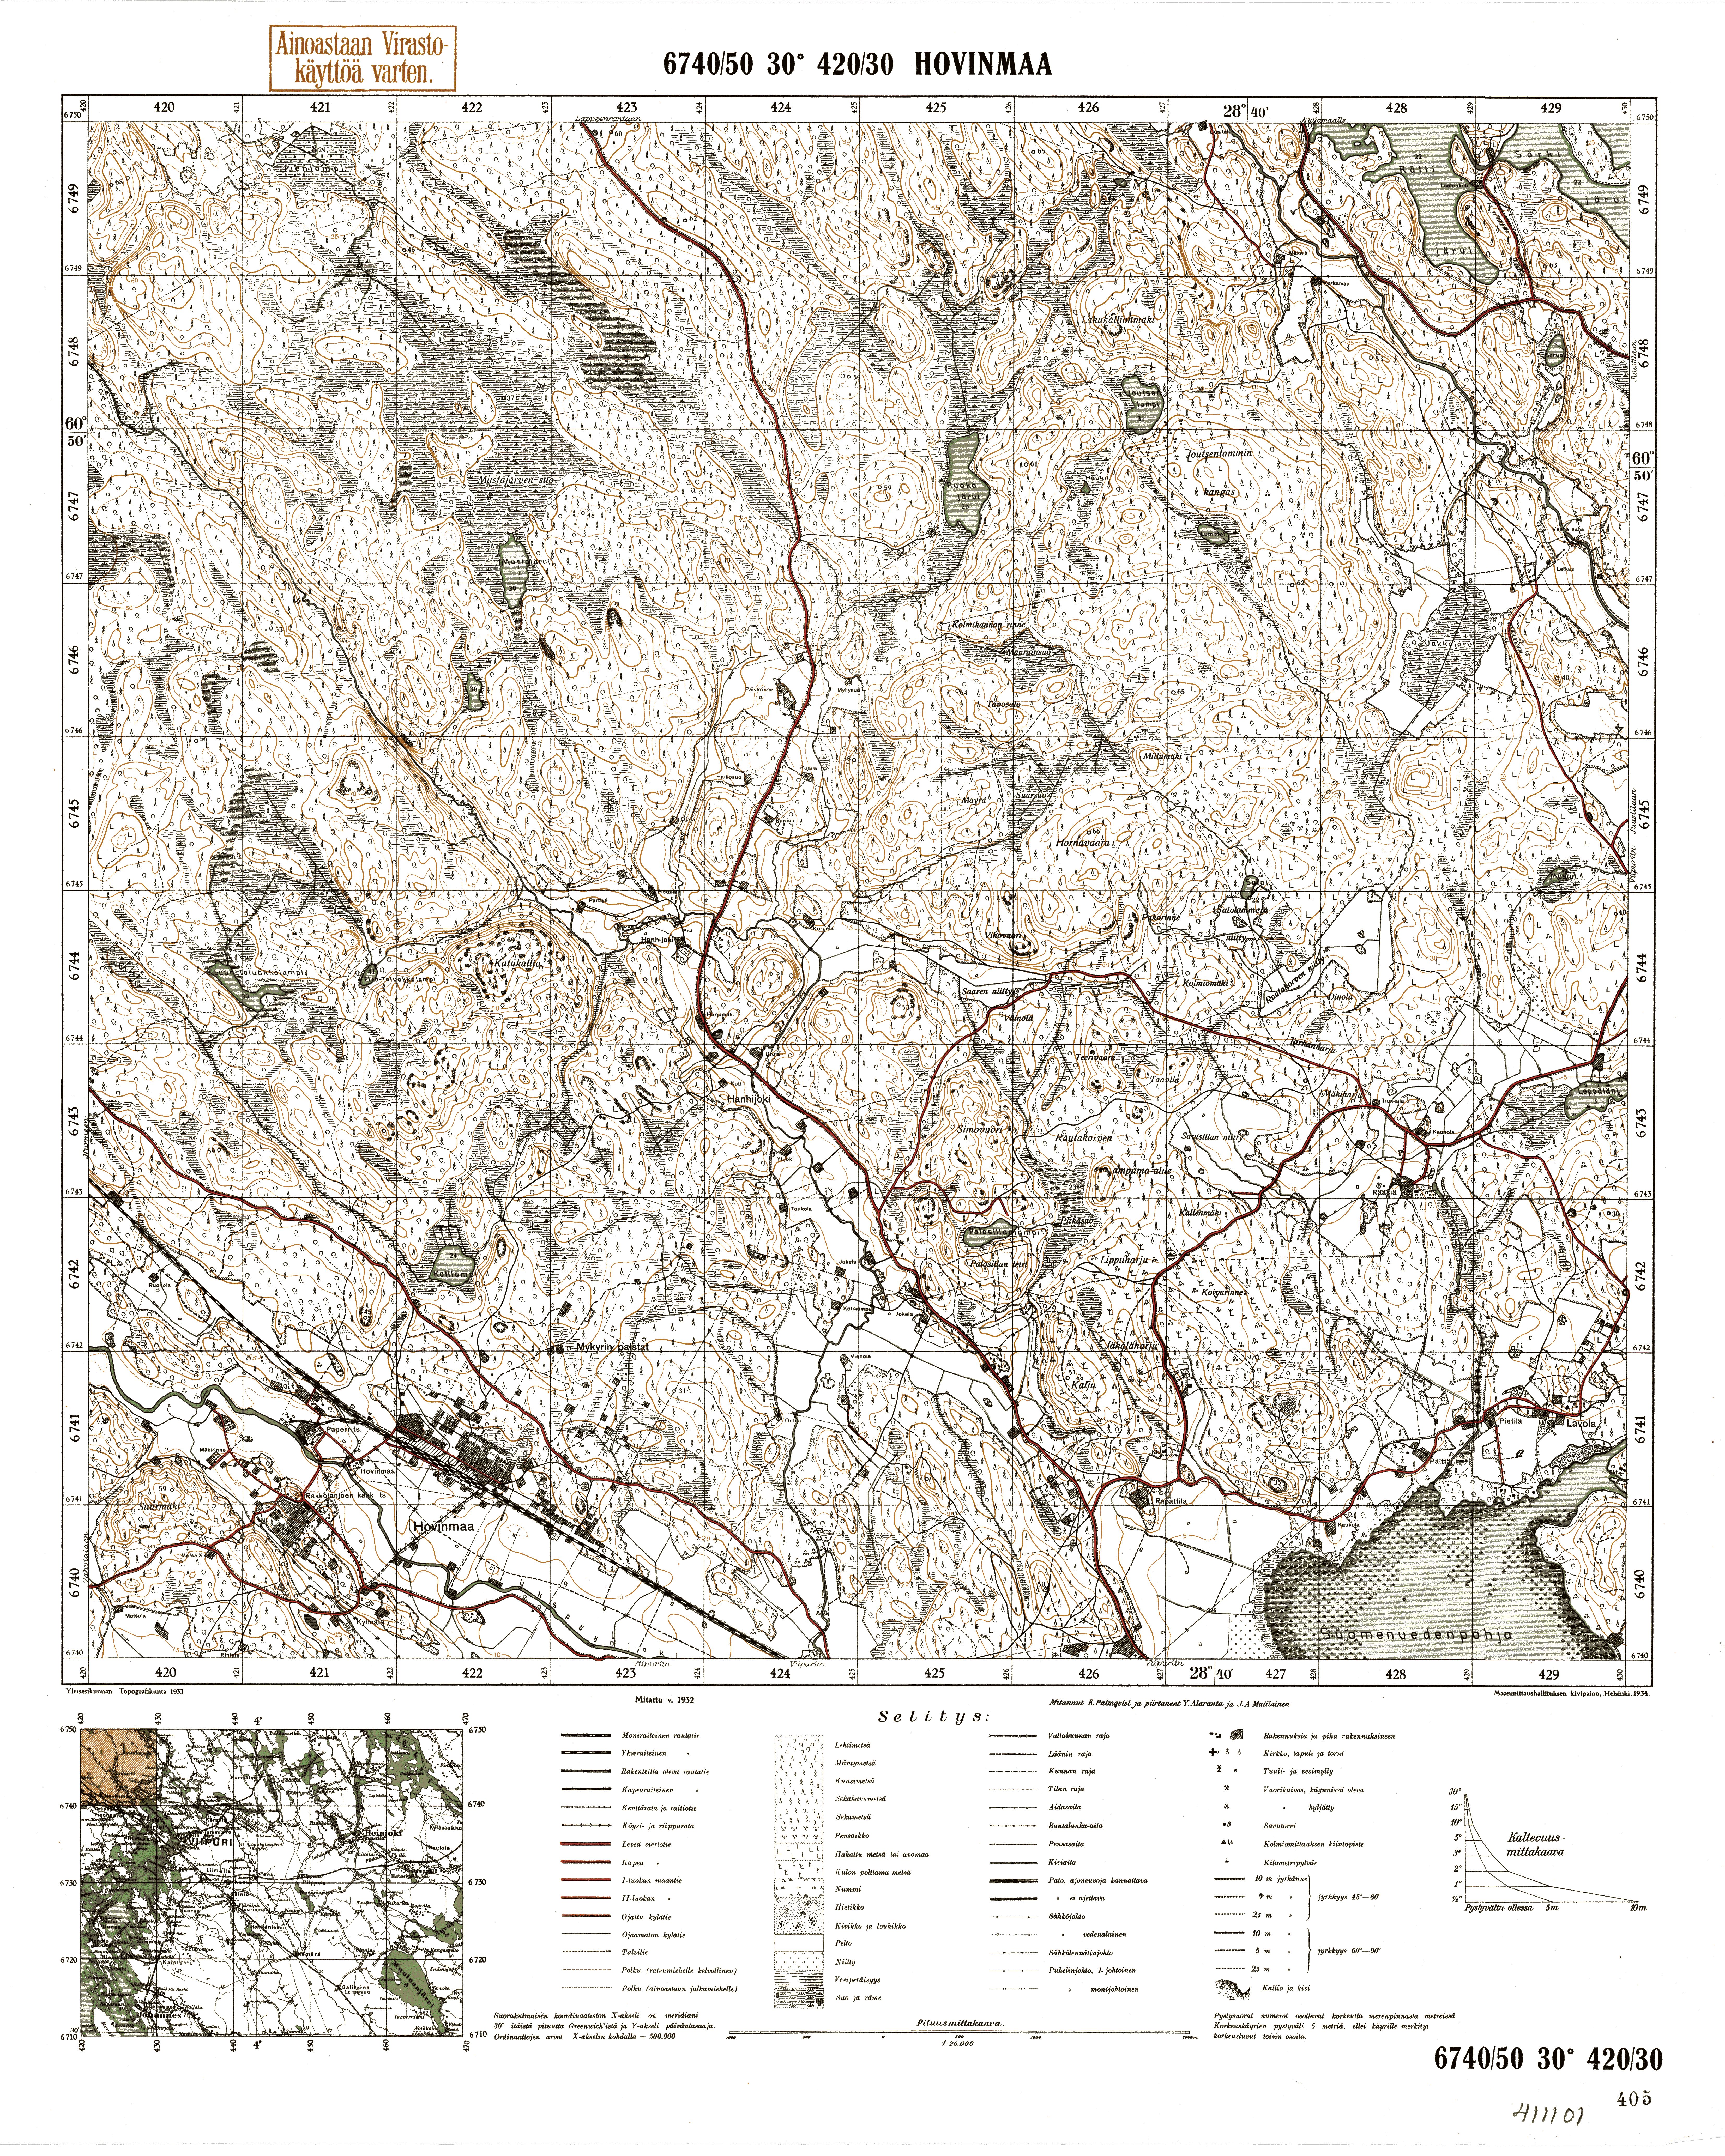 Bulatnoje Village Site. Hovinmaa. Topografikartta 411101. Topographic map from 1942